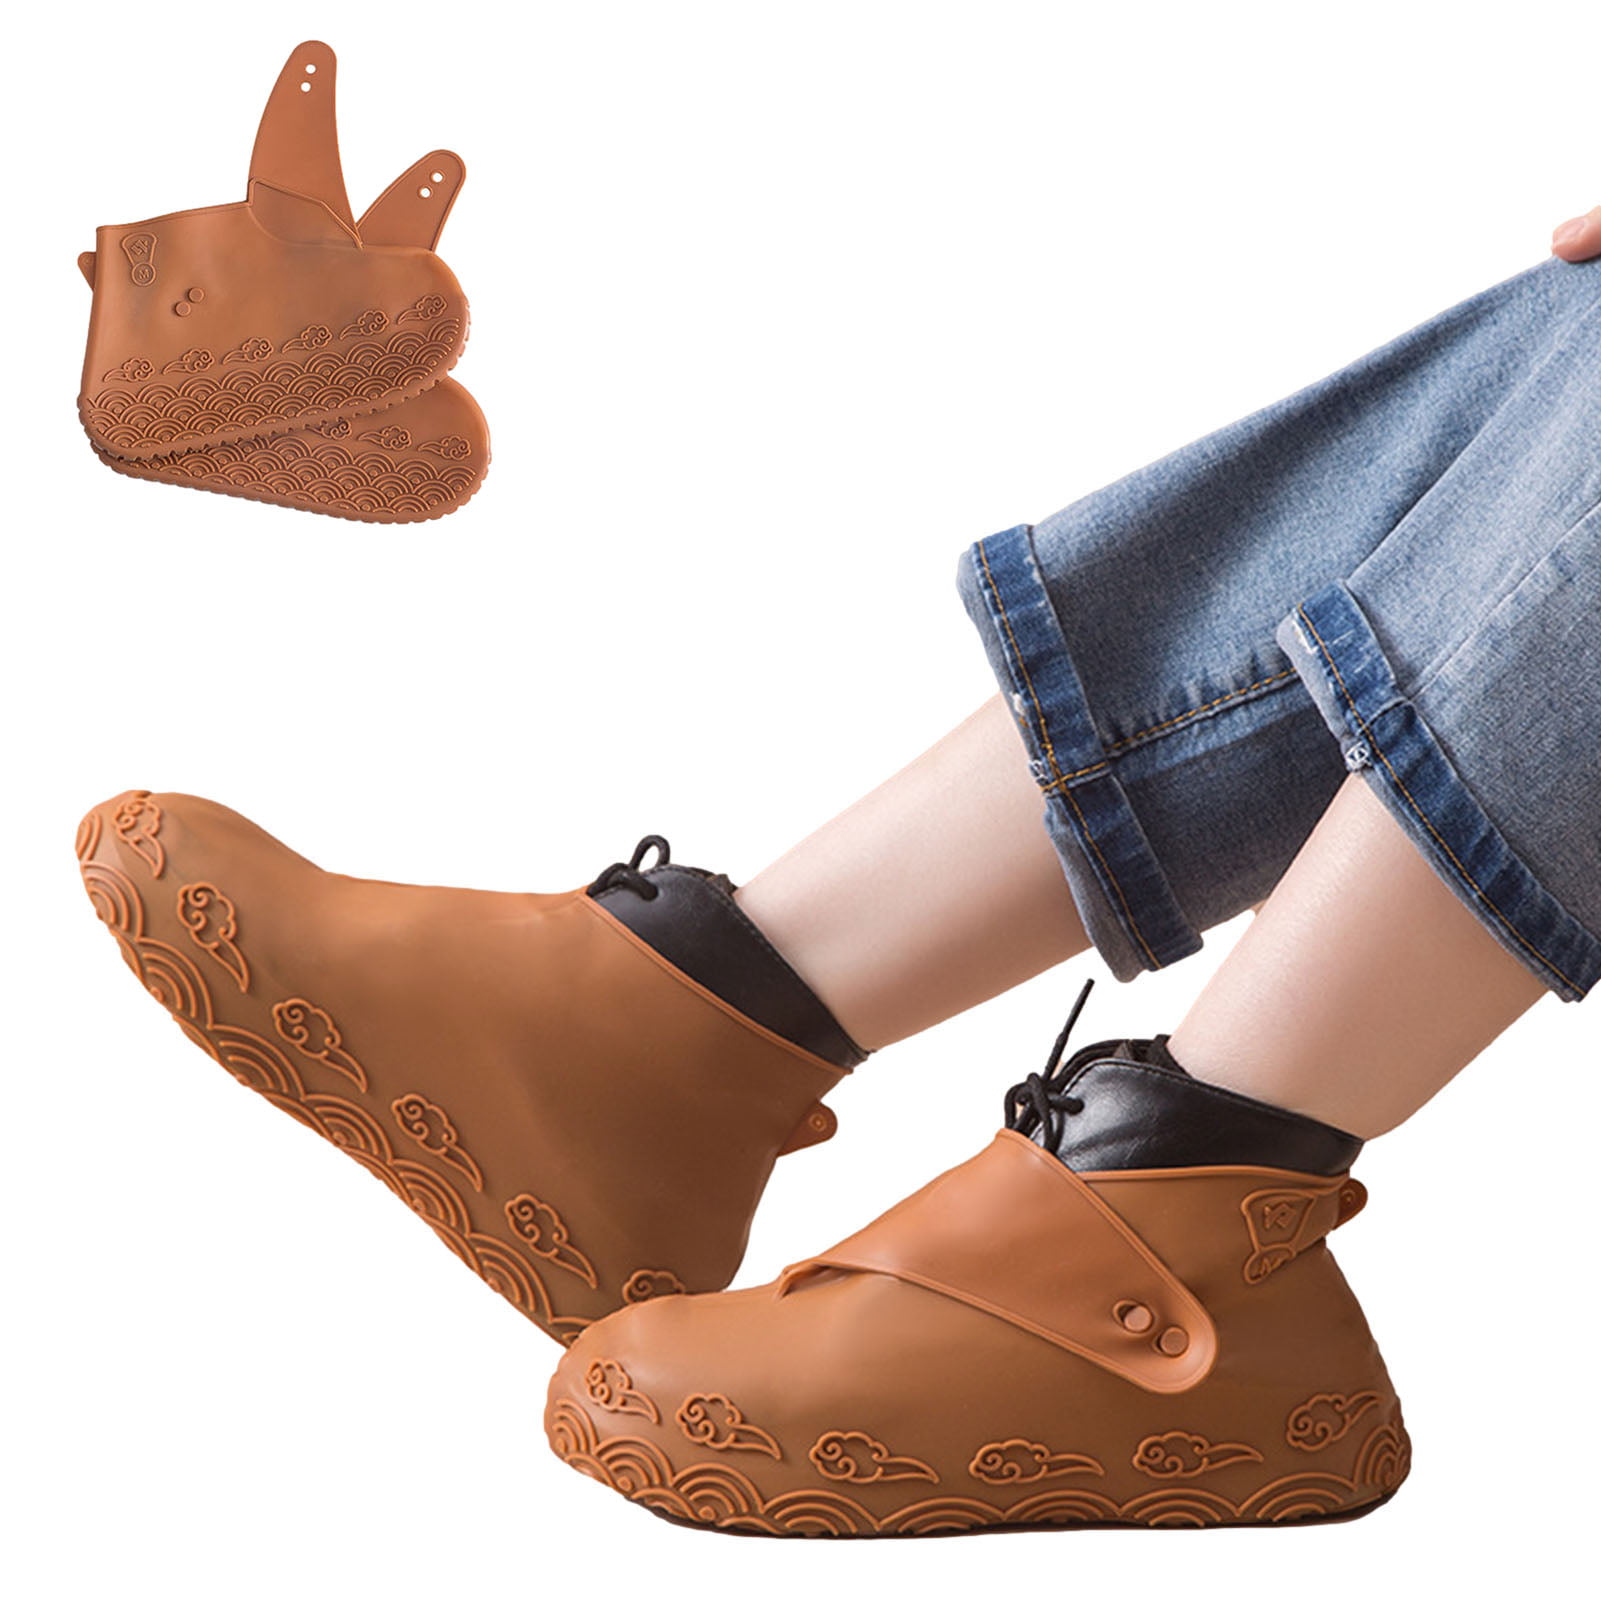 Details about   Reusable Silicone Waterproof Shoes Cover Shoe Protectors Non-Slip Rain Boots 